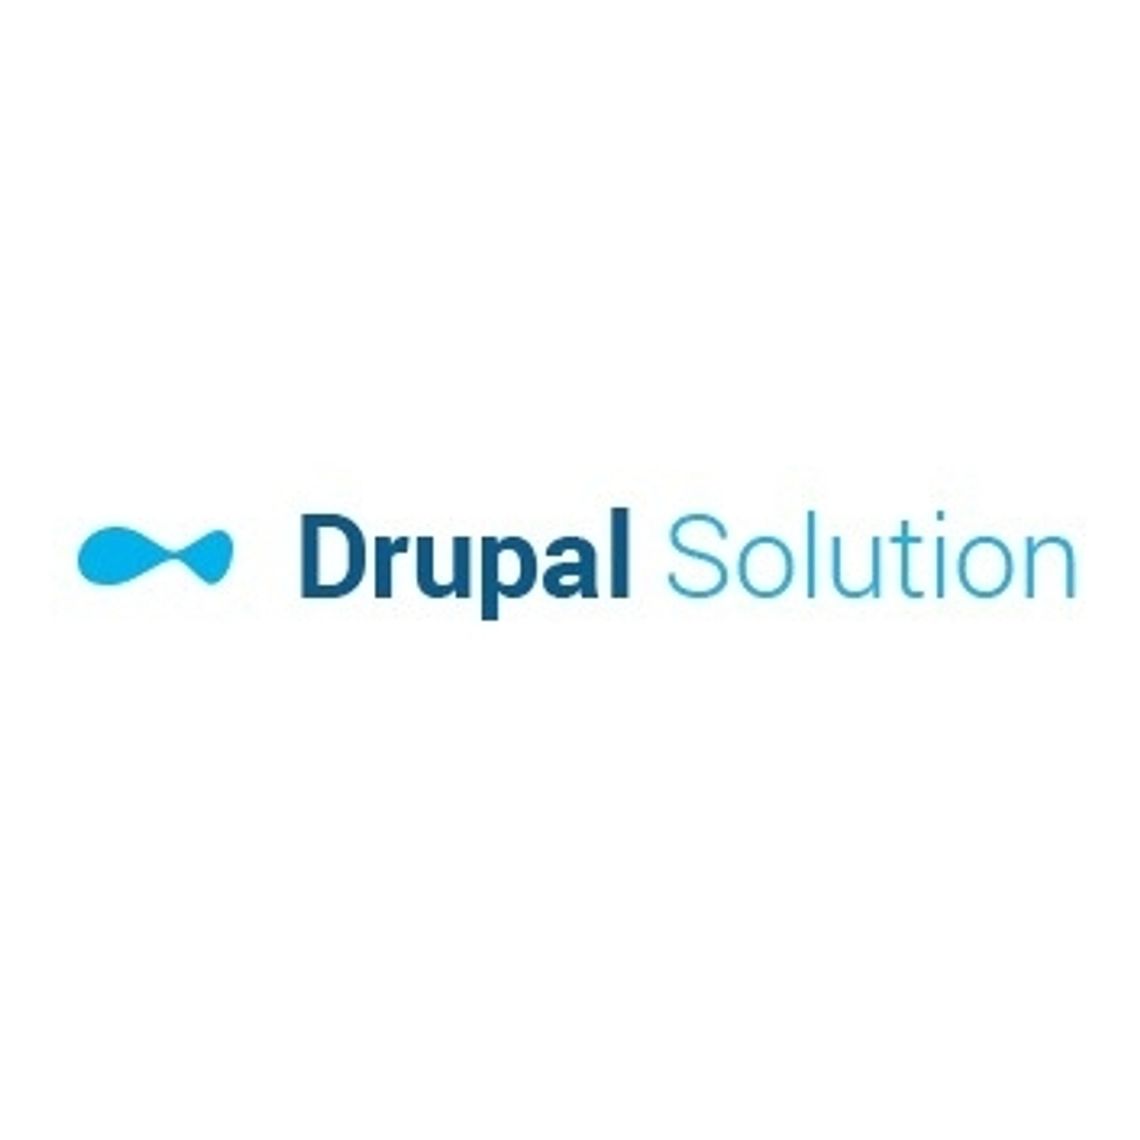 DrupalSolution